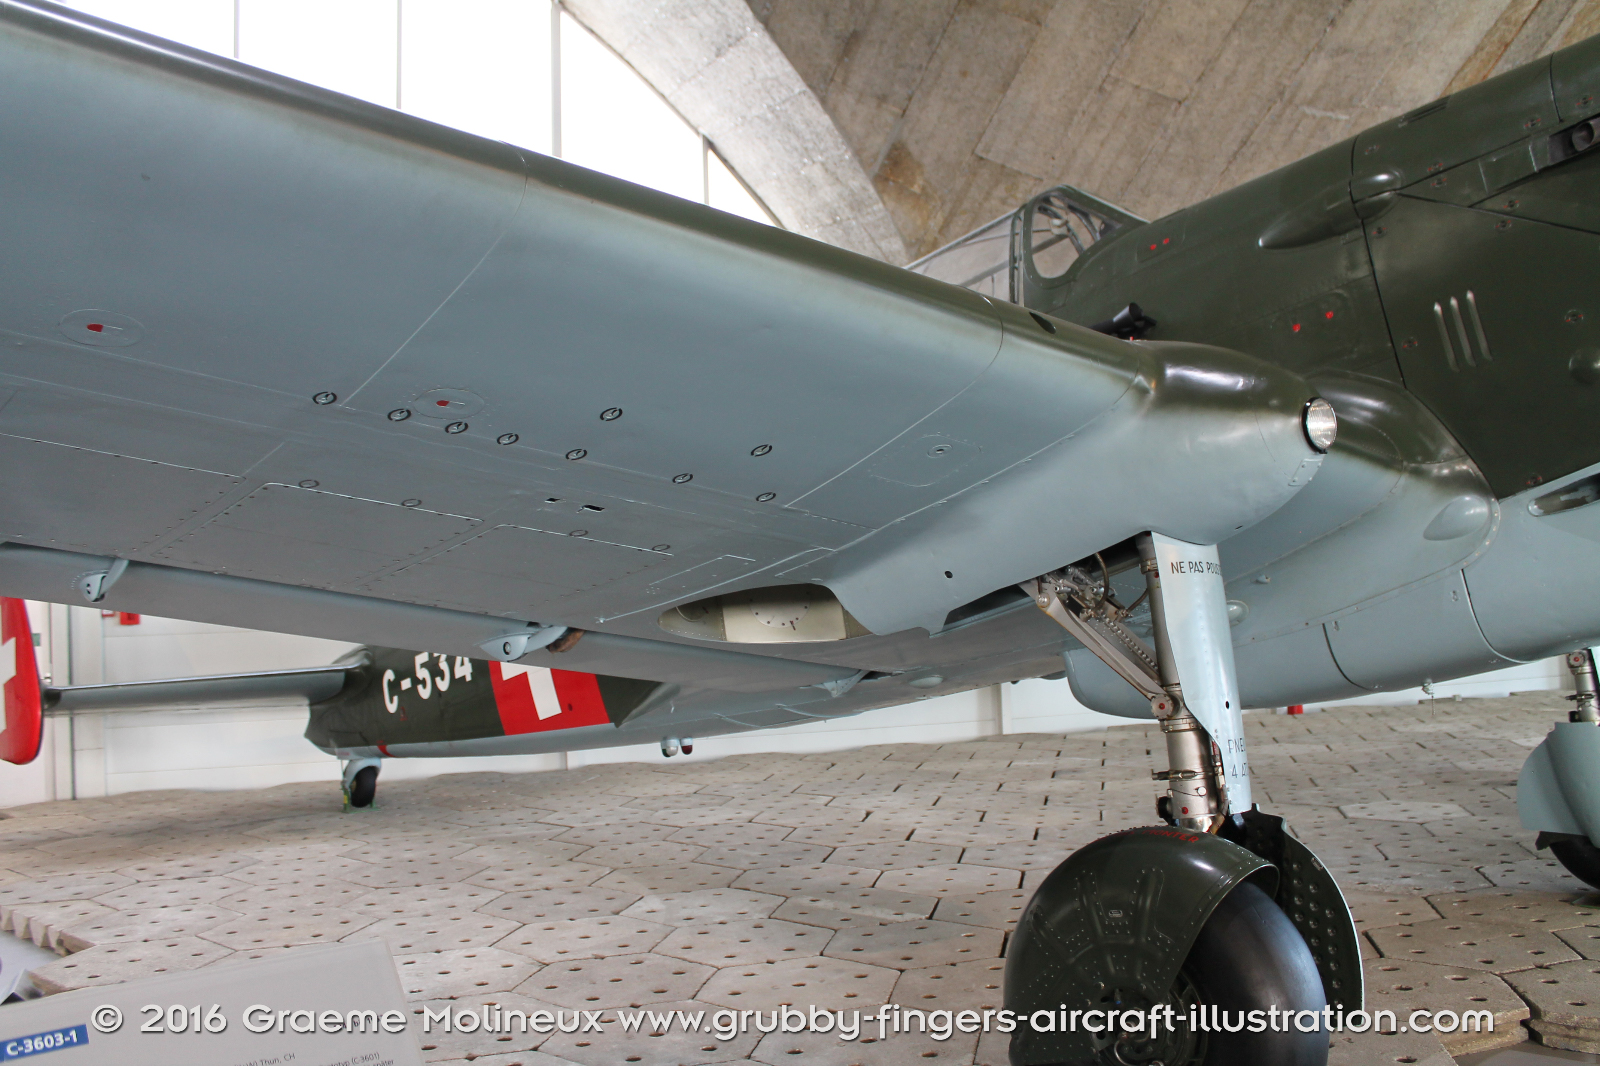 K+W_C-36_C-534_Swiss_Air_Force_Museum_2015_18_GrubbyFingers